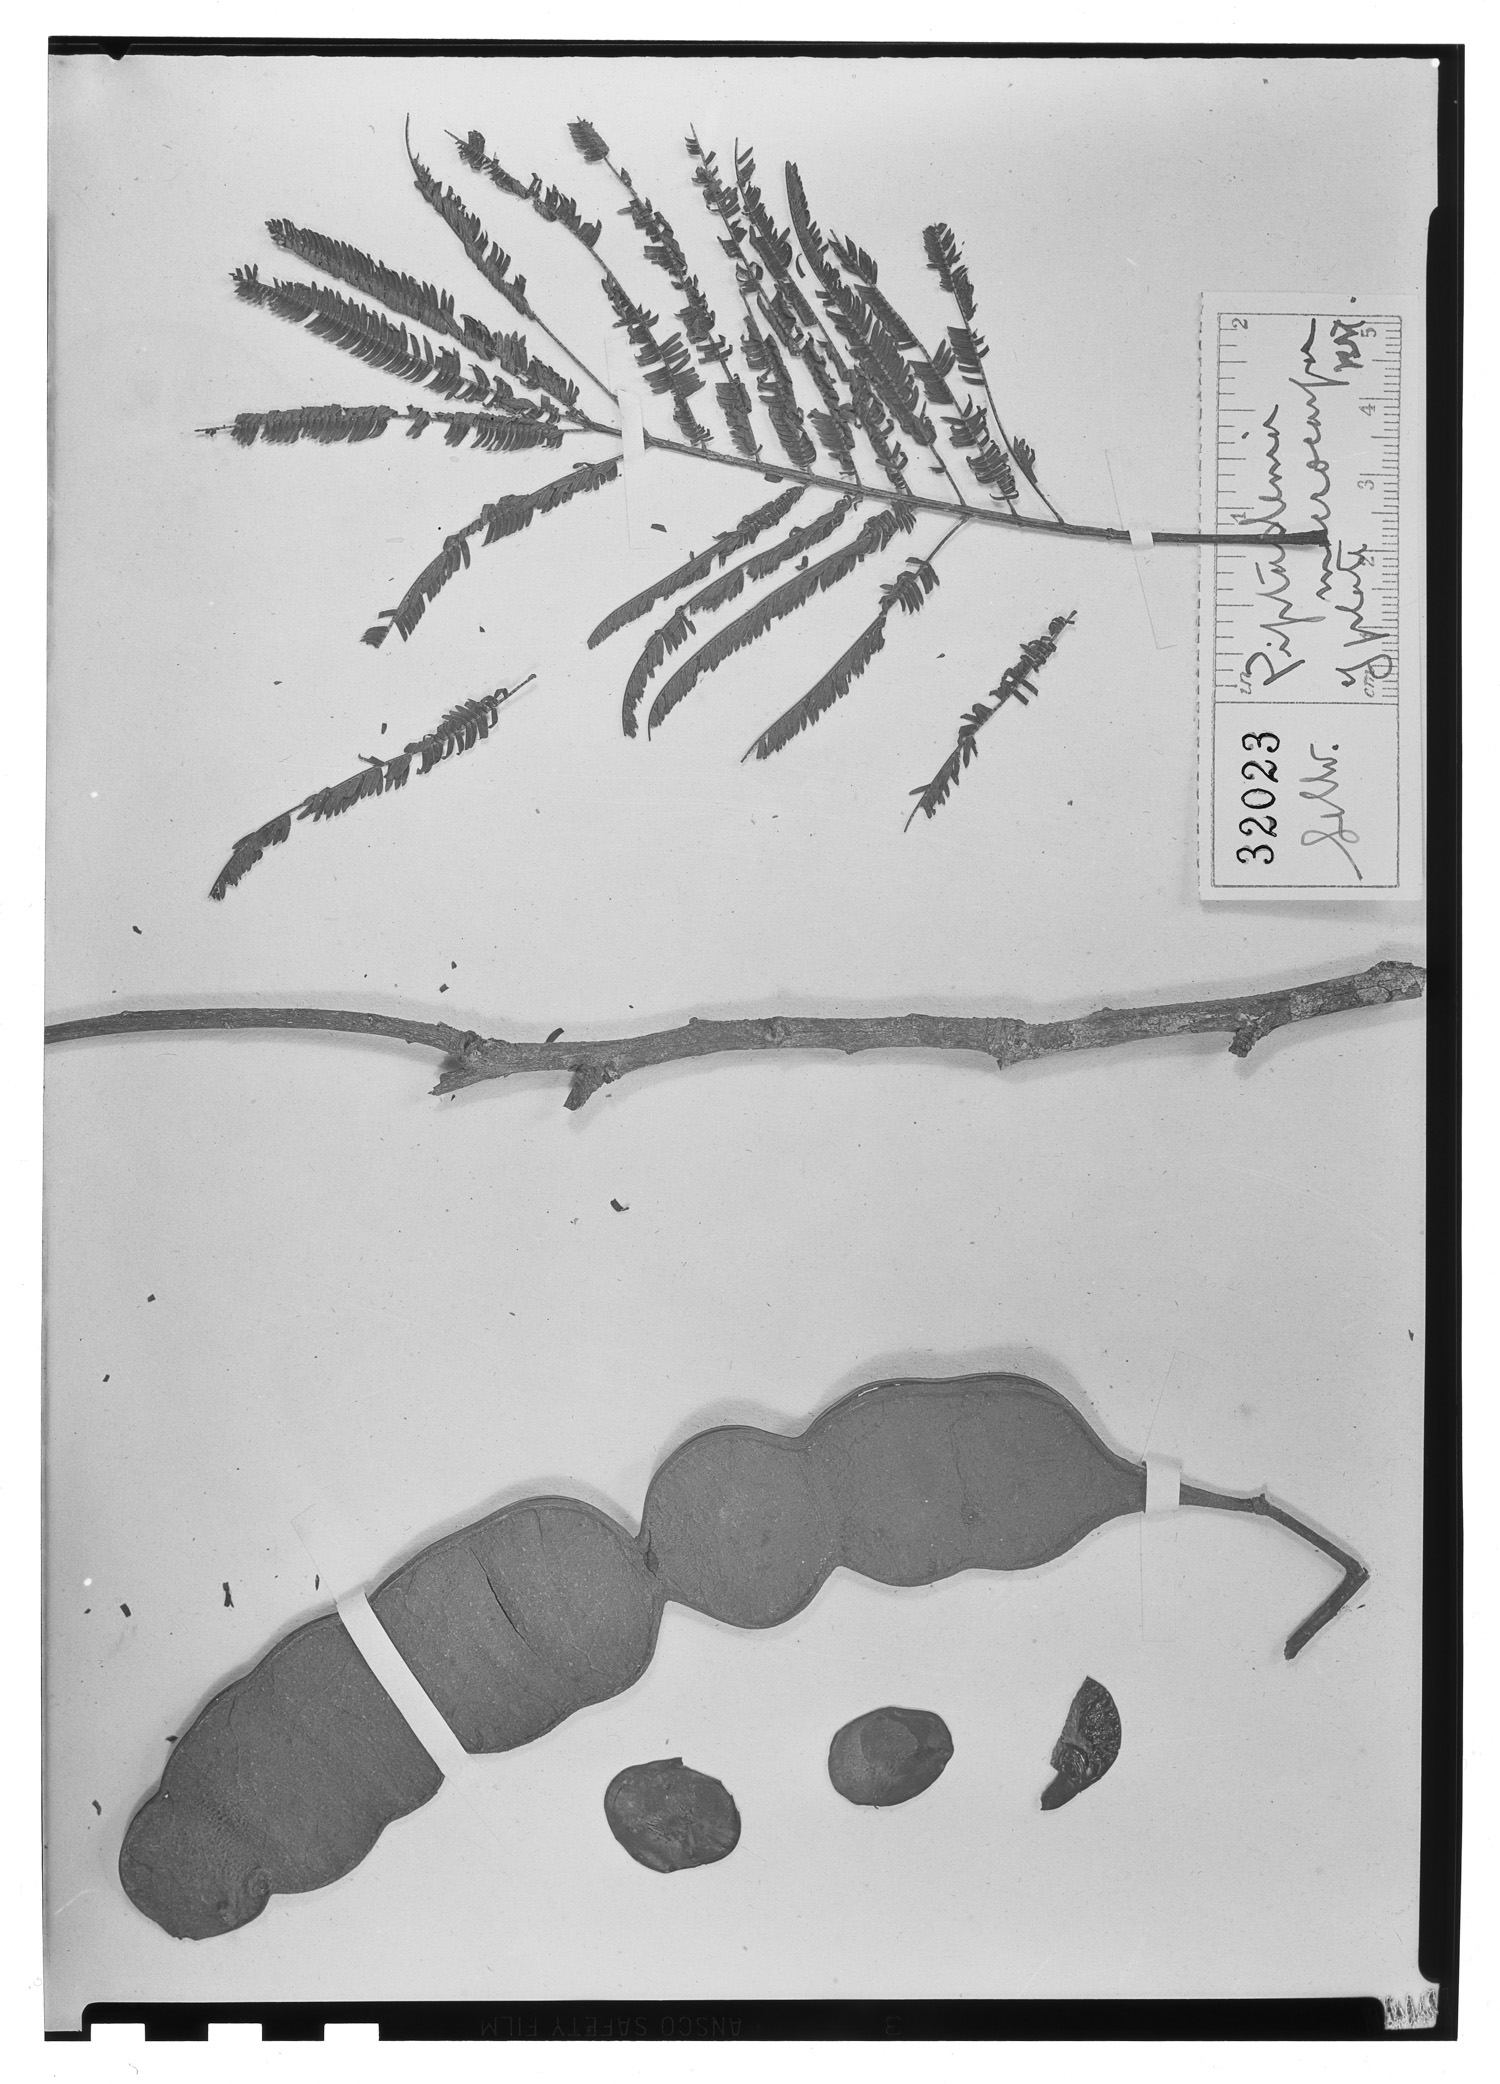 Piptadenia macrocarpa image